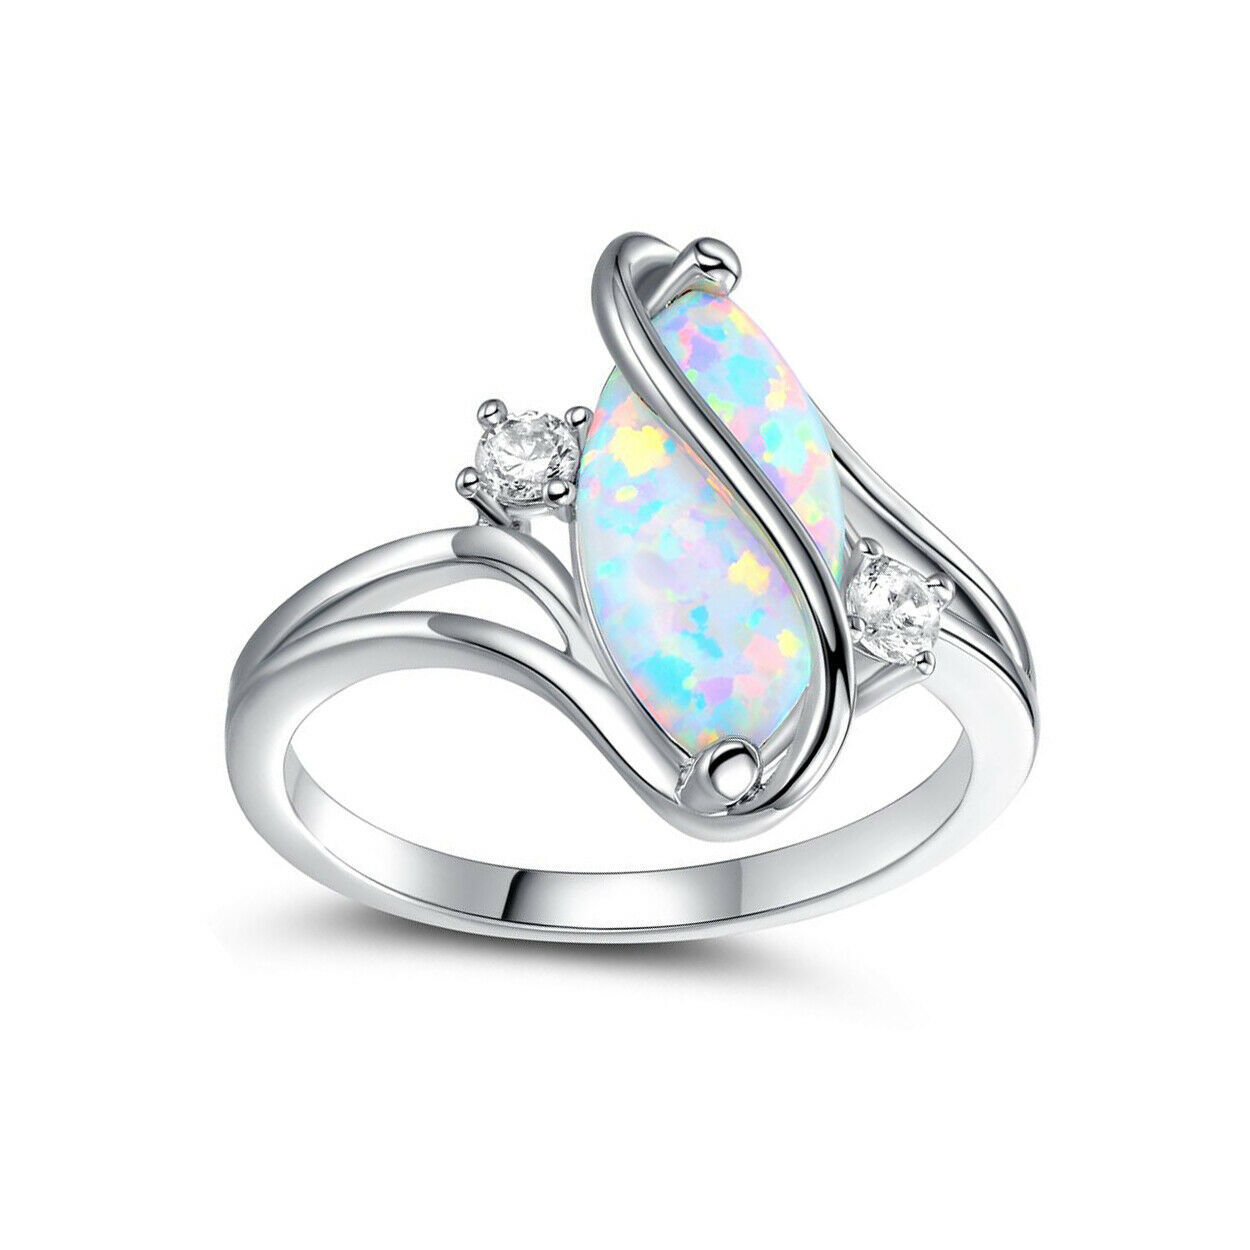 Fashion Oval Cut Opal 925 Silver Rings Jewelry Women Wedding Ring Size 6-10